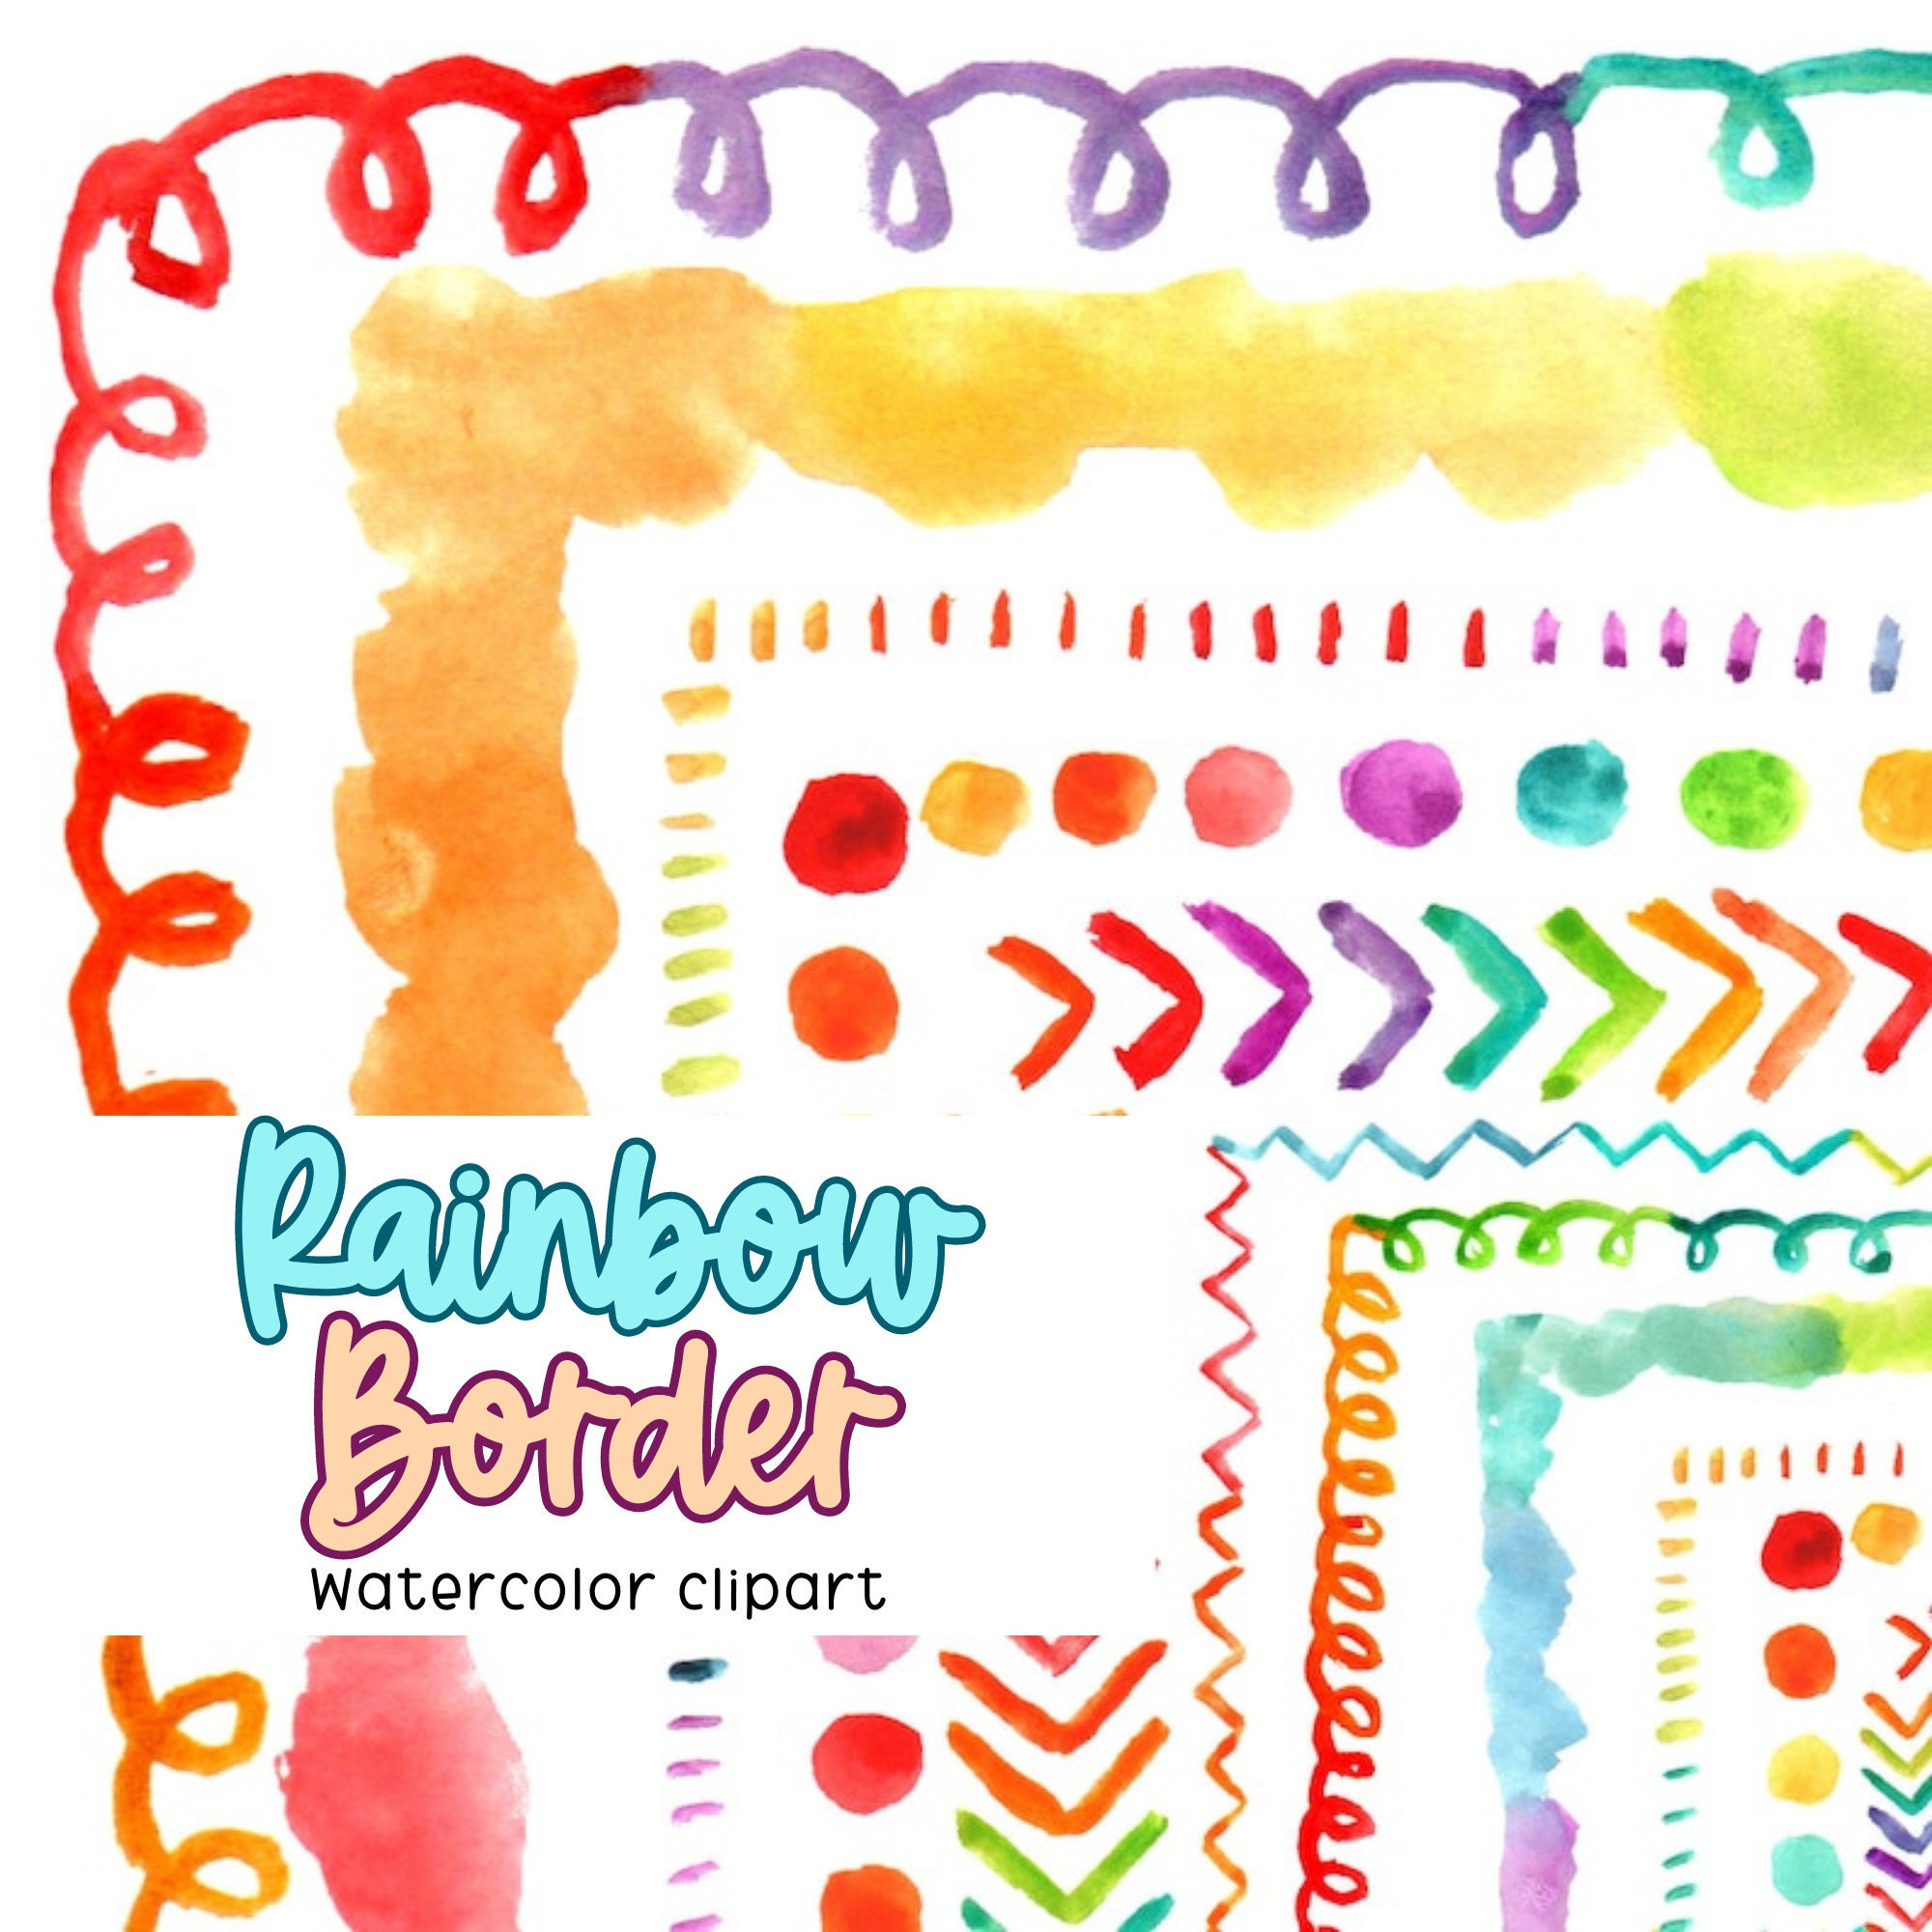 Rainbow Crayon Photo, Colorful Playroom Art, Children's Wall Decor, Crayons  Wall Art, Colorful Kids' Art, Rainbow Wall Art, Wavy Rainbow 